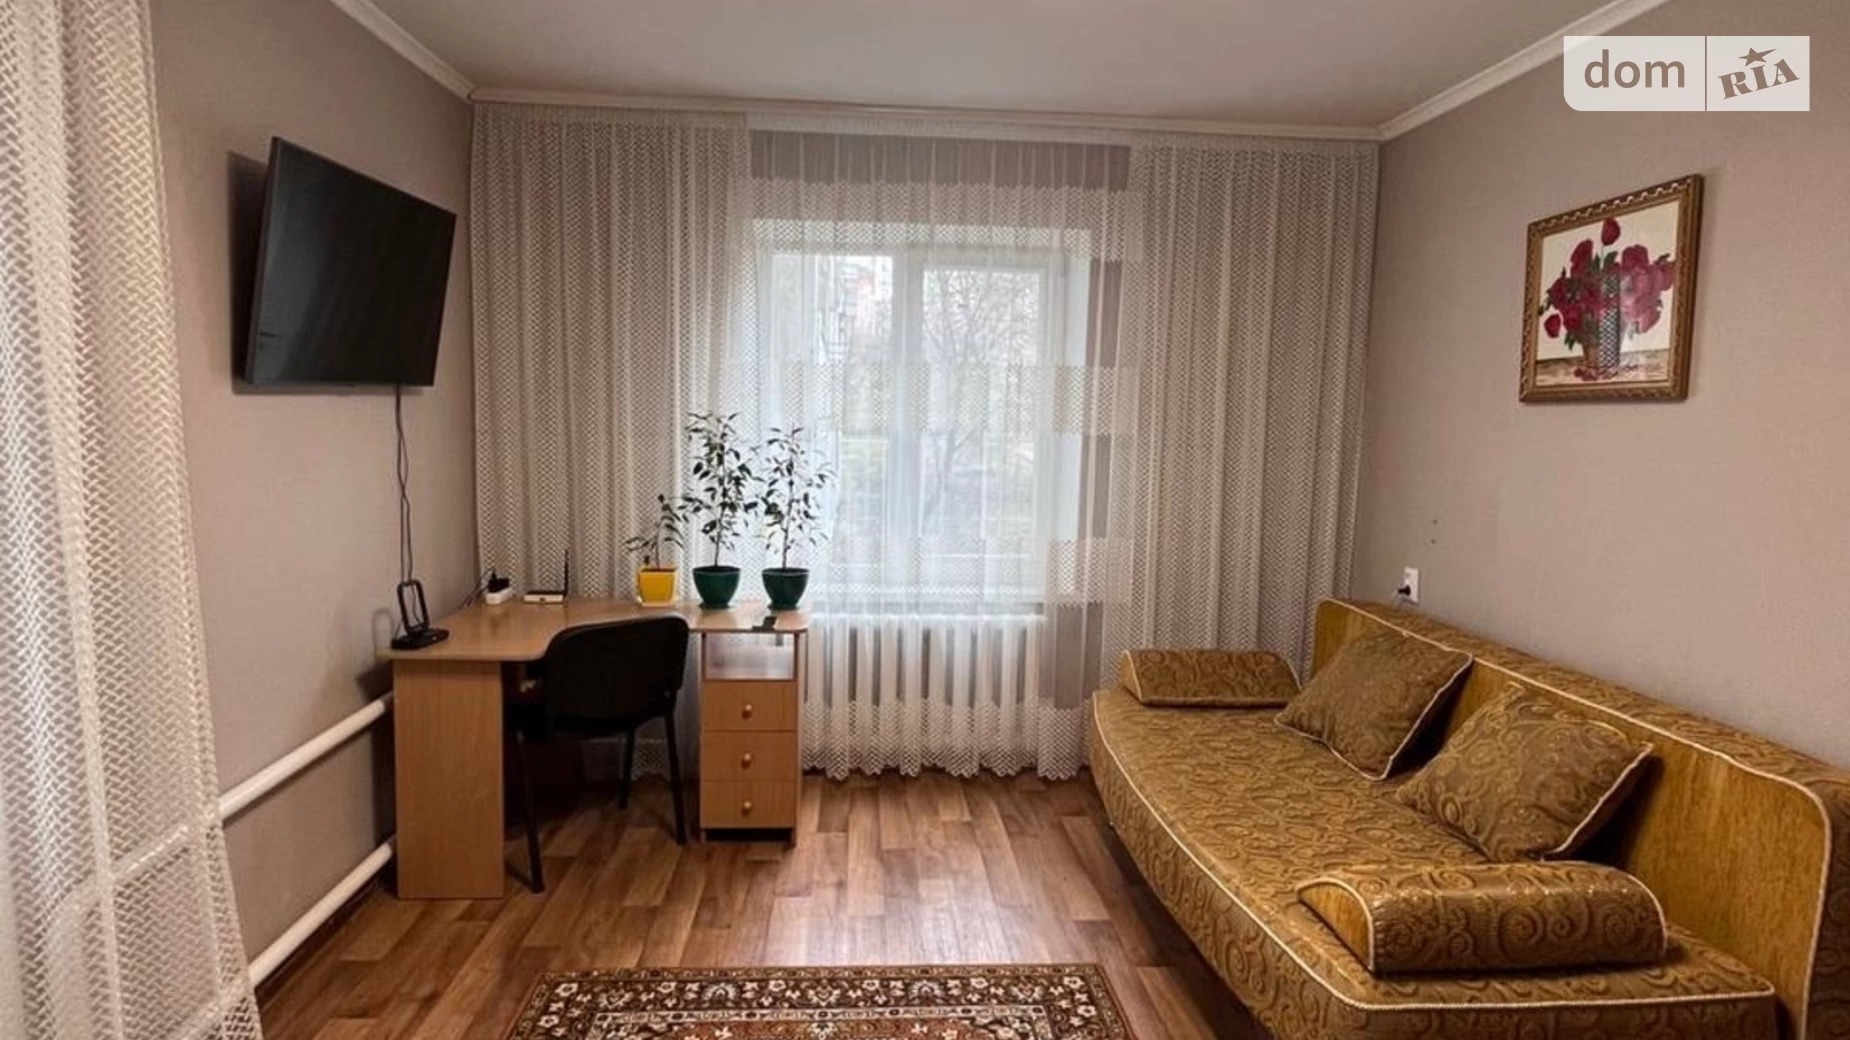 Продається 1-кімнатна квартира 32 кв. м у Хмельницькому, вул. Степана Бандери